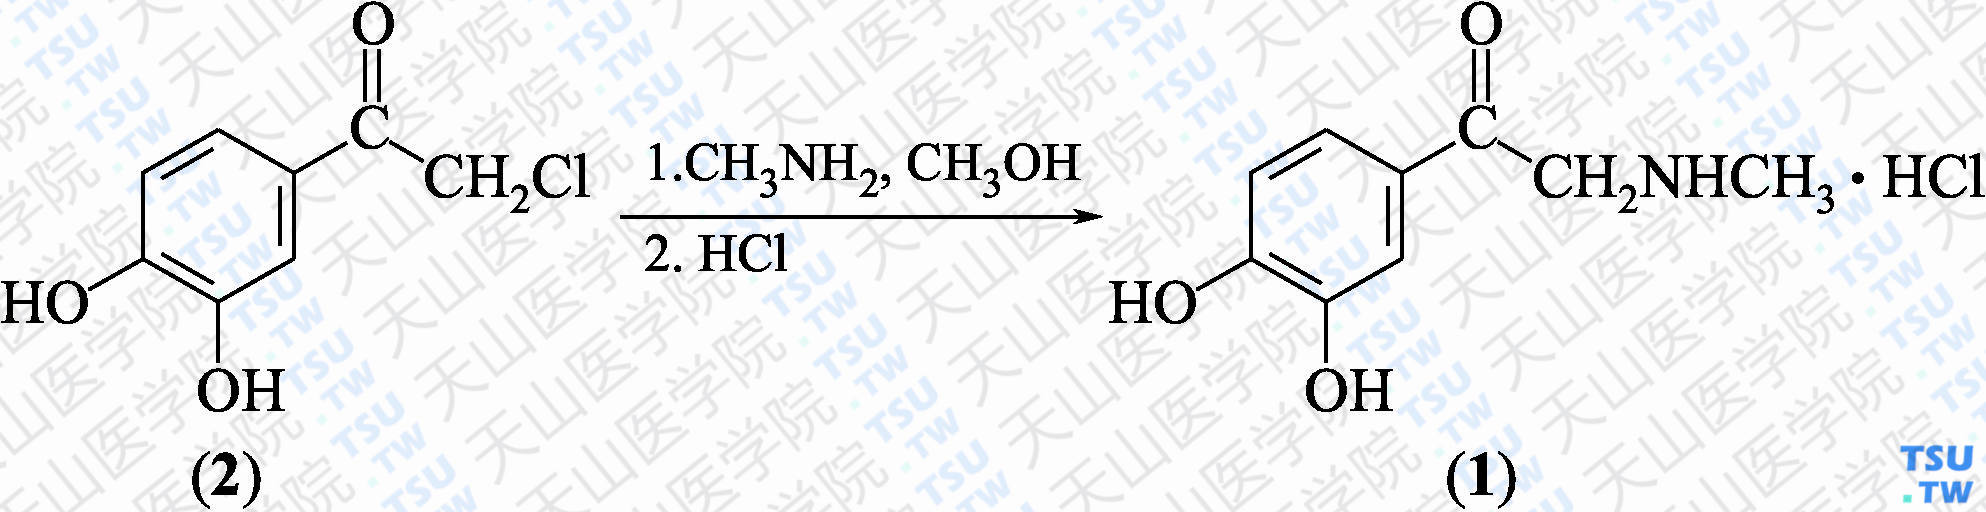 1-（3，4-二羟基苯基）-2-（甲氨基）乙酮盐酸盐（分子式：C<sub>9</sub>H<sub>12</sub>ClNO<sub>3</sub>）的合成方法路线及其结构式